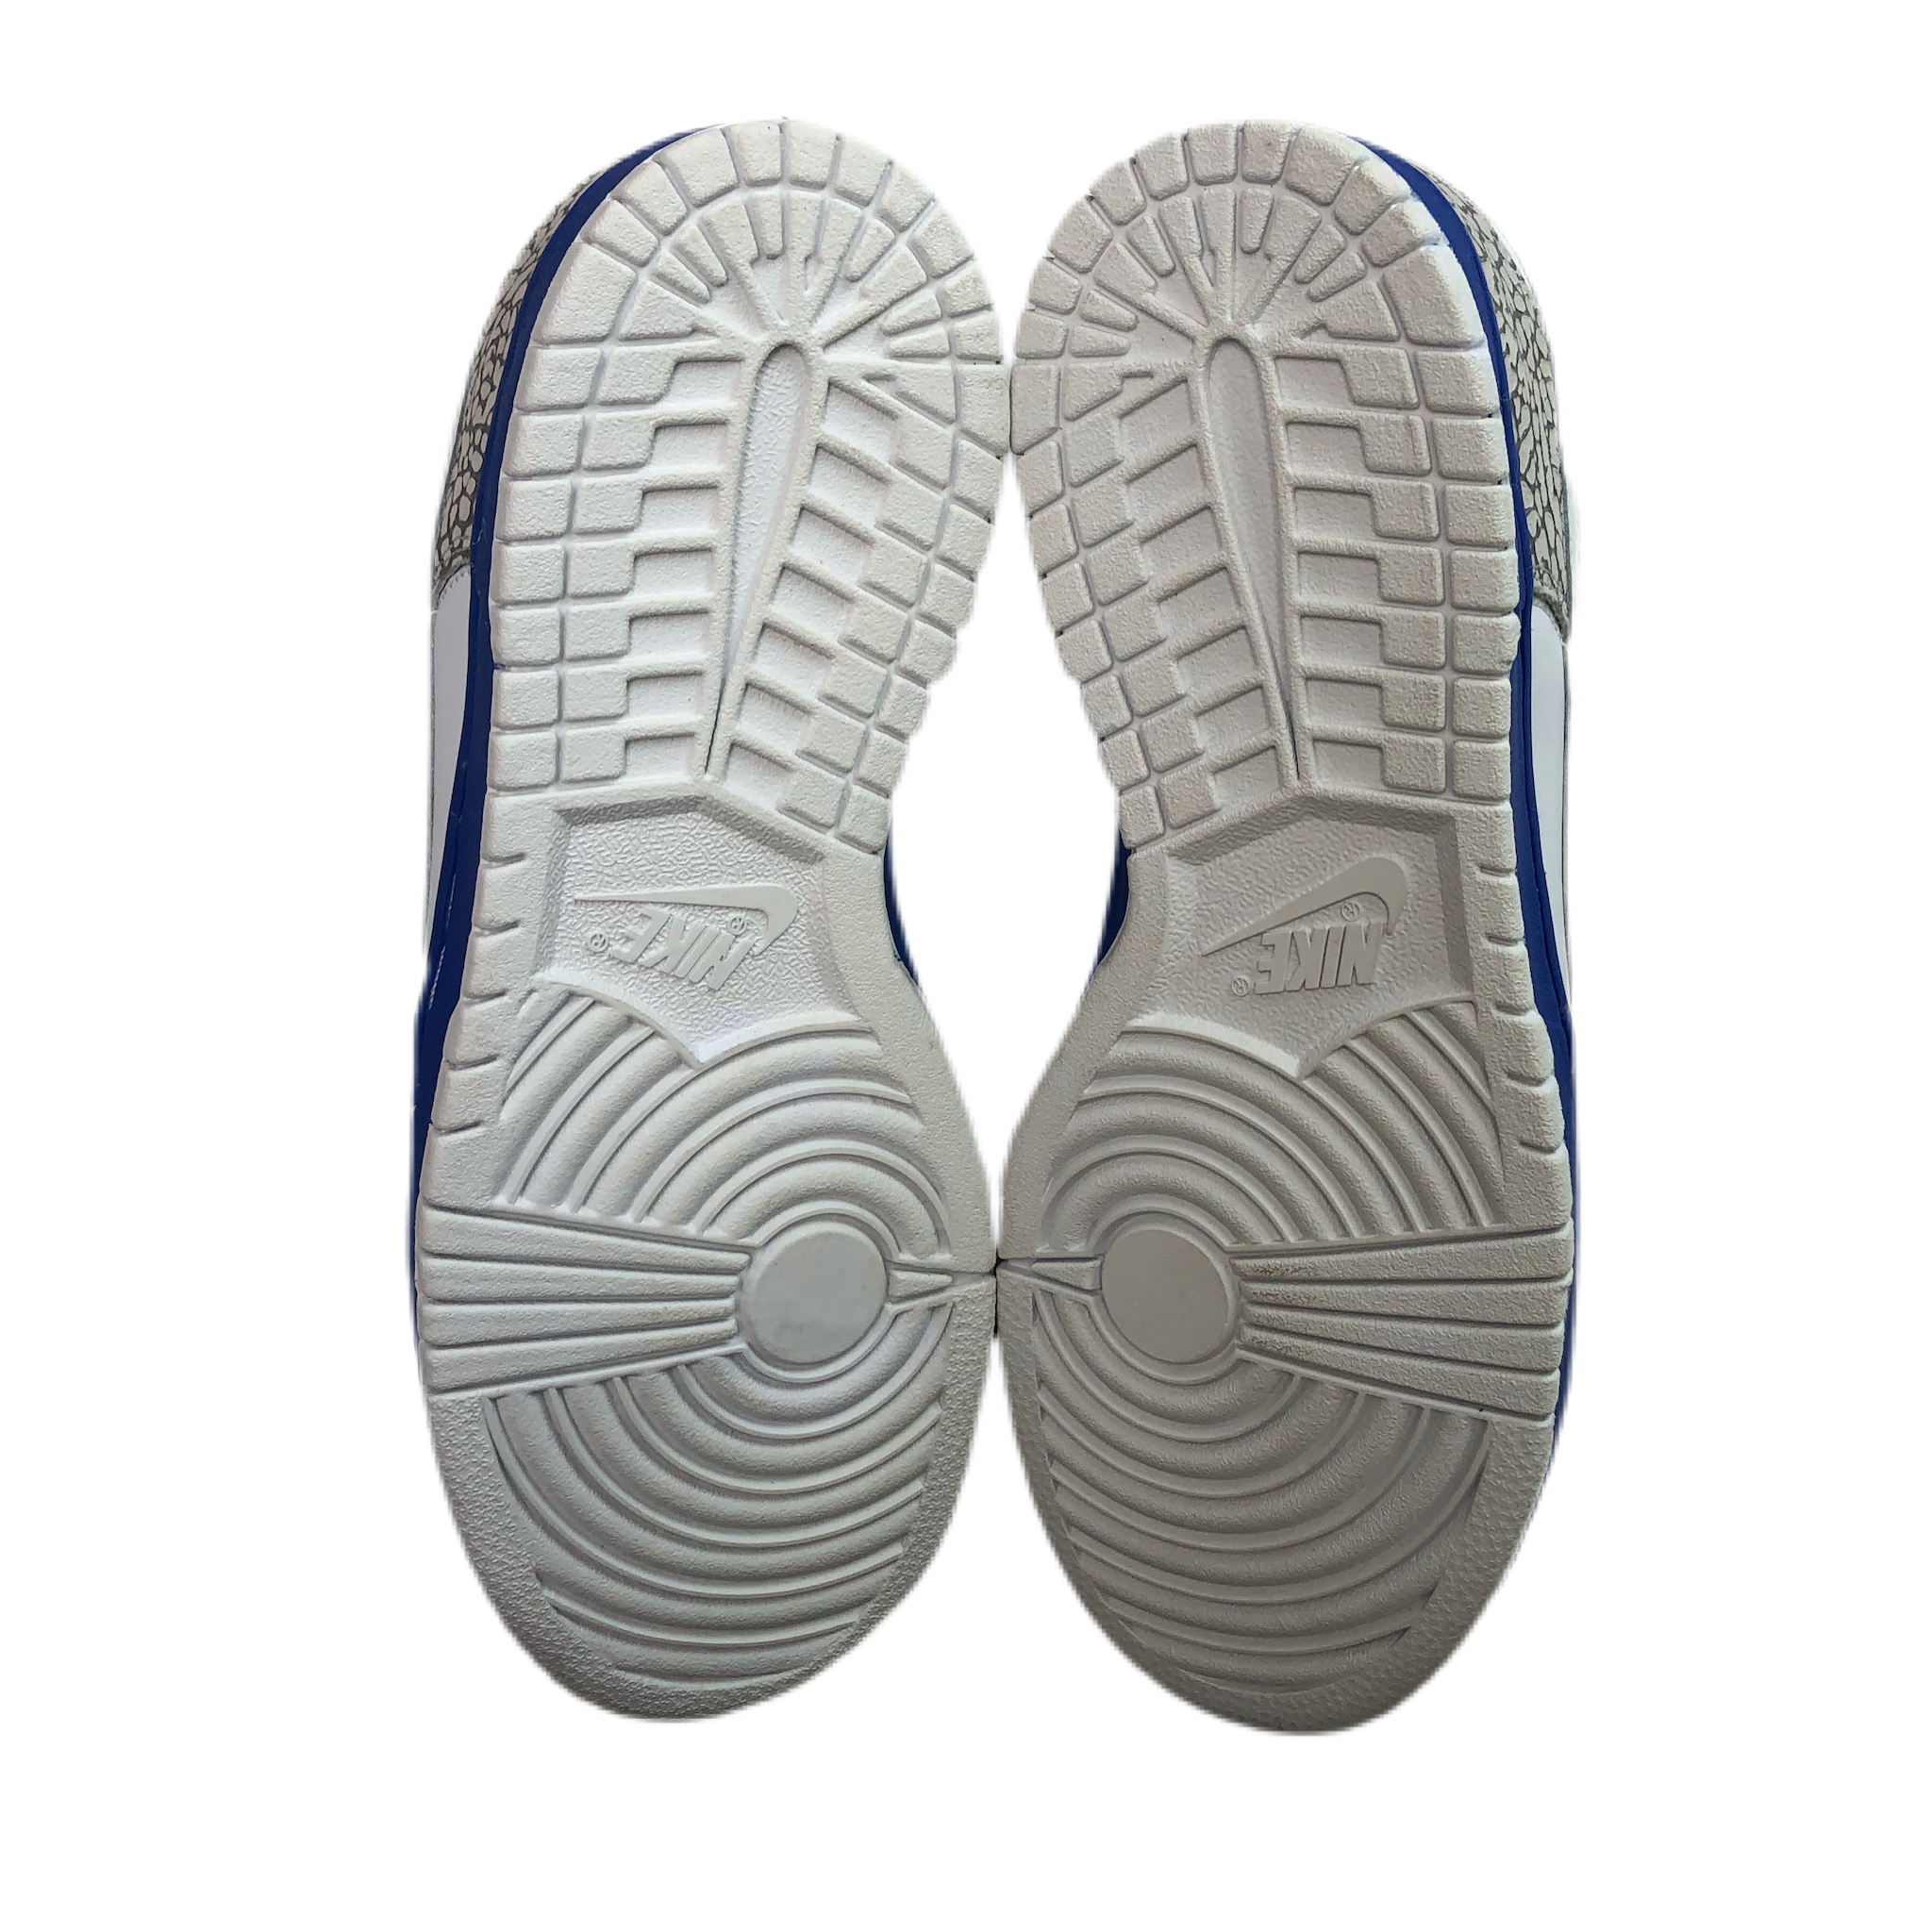 Nike Dunk Low “Jordan Pack” Blue/White